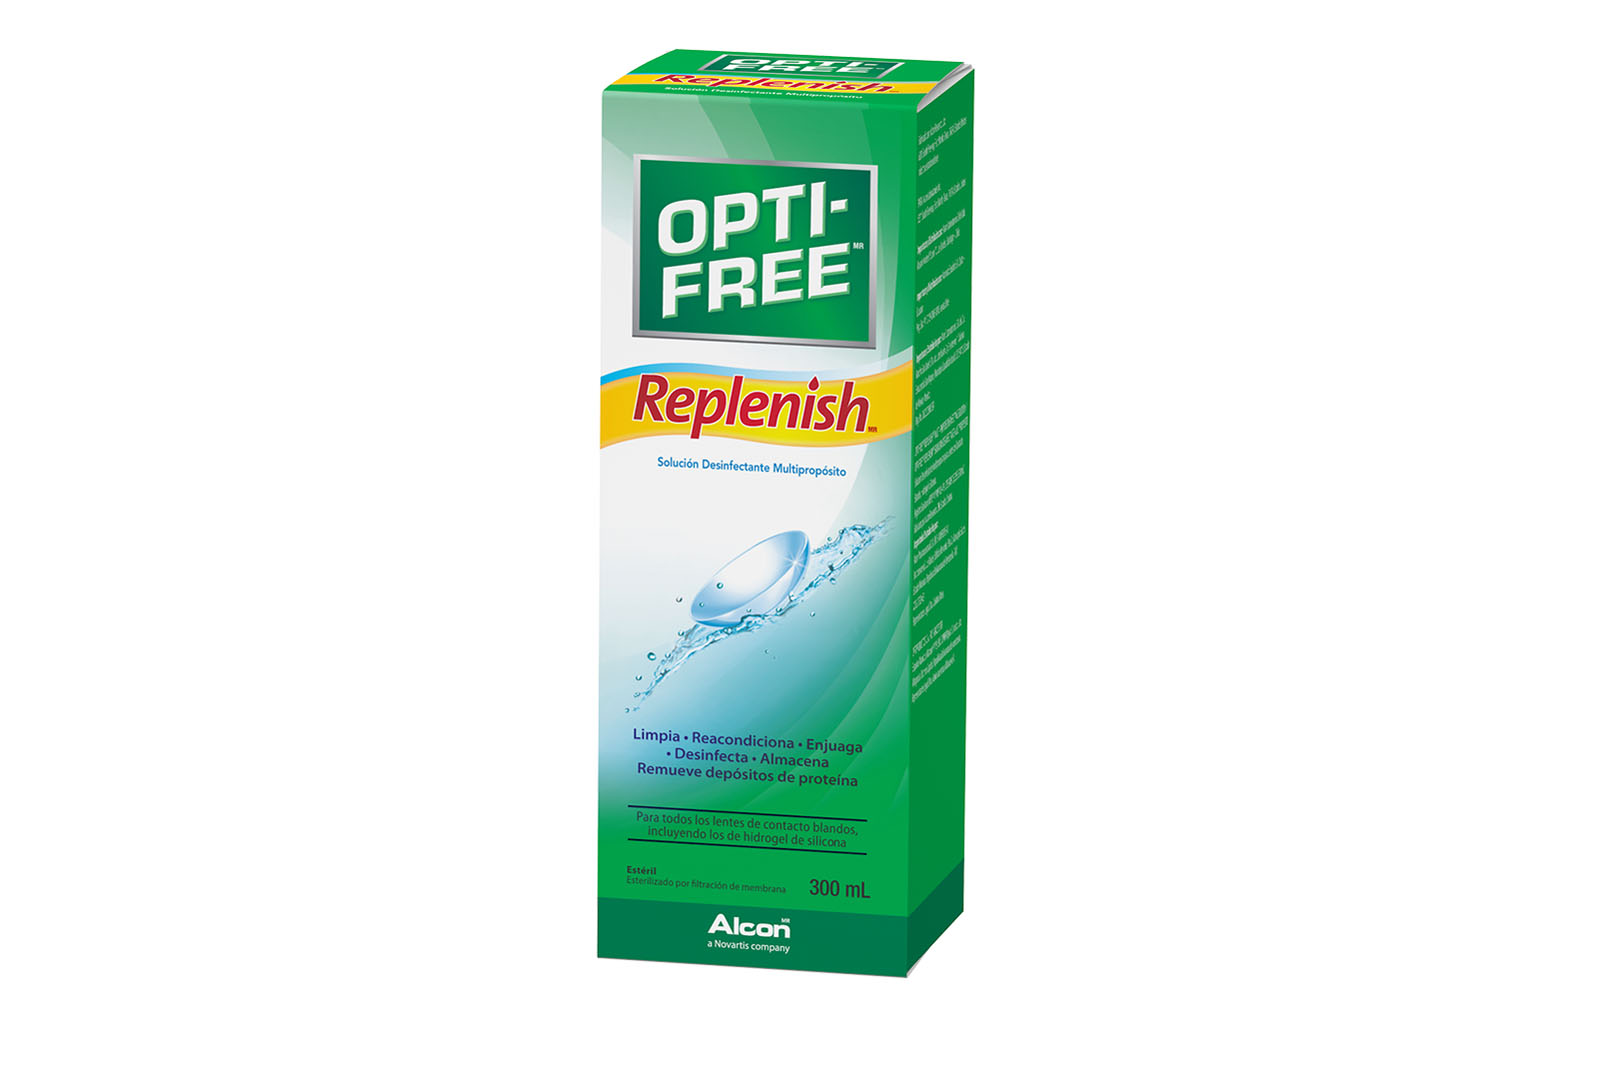 Opti-Free Replenish x300ml | Rotter y Krauss image number 0